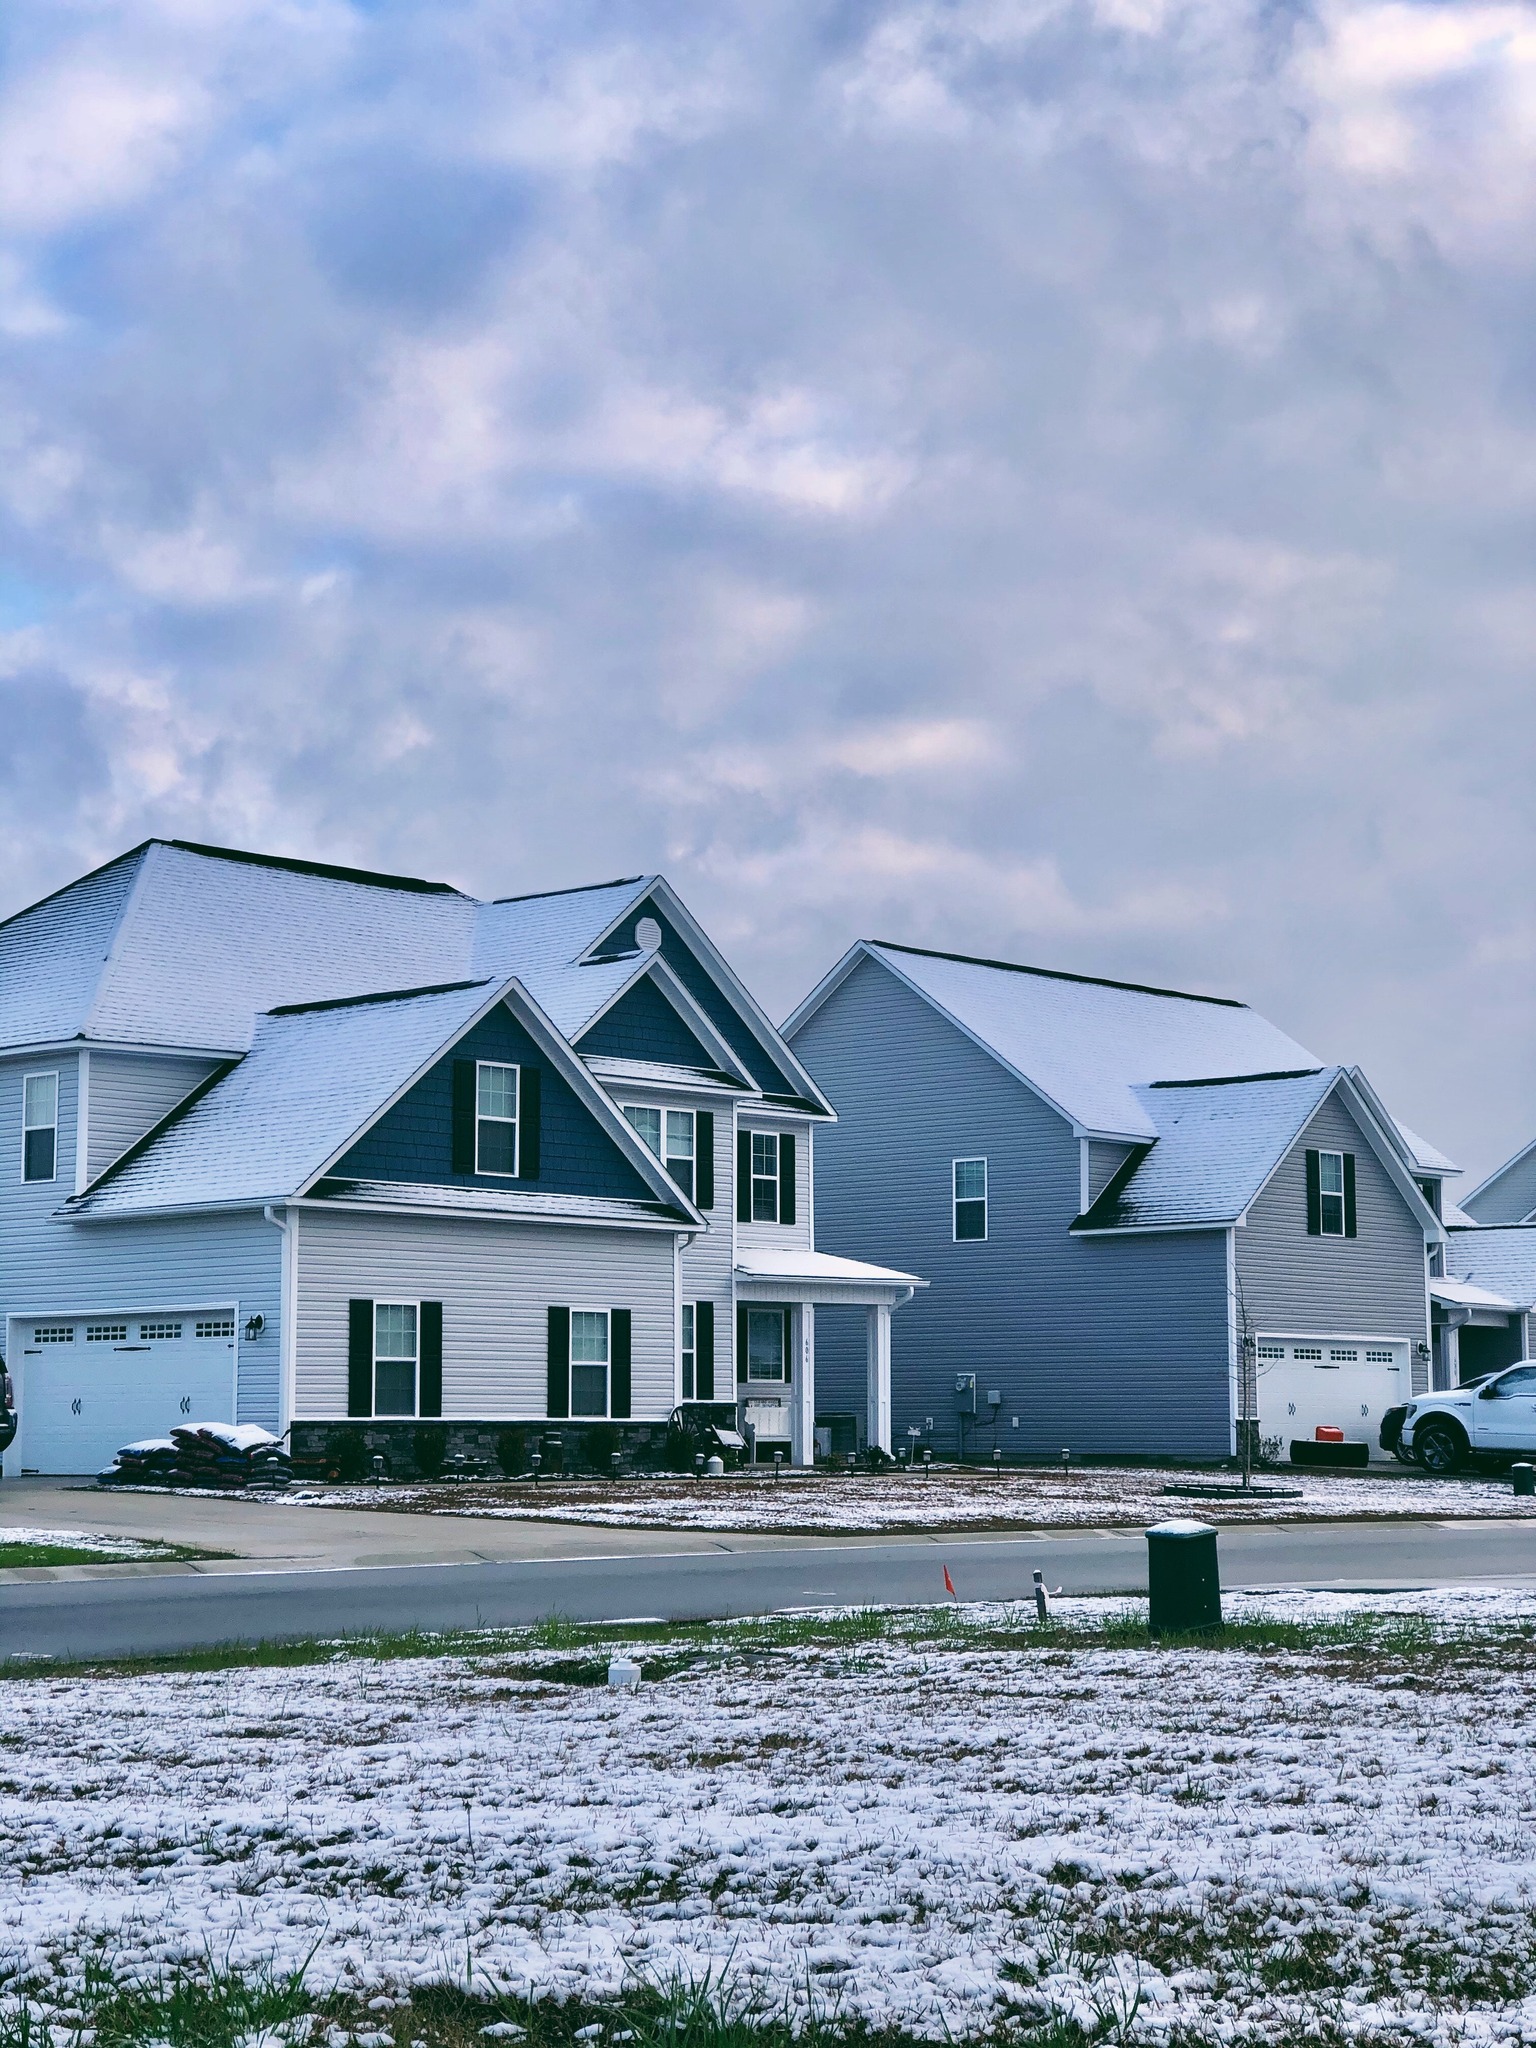 Thrush & Son: Complete Home Improvement Company 115 Jefferson St, Brookville Ohio 45309